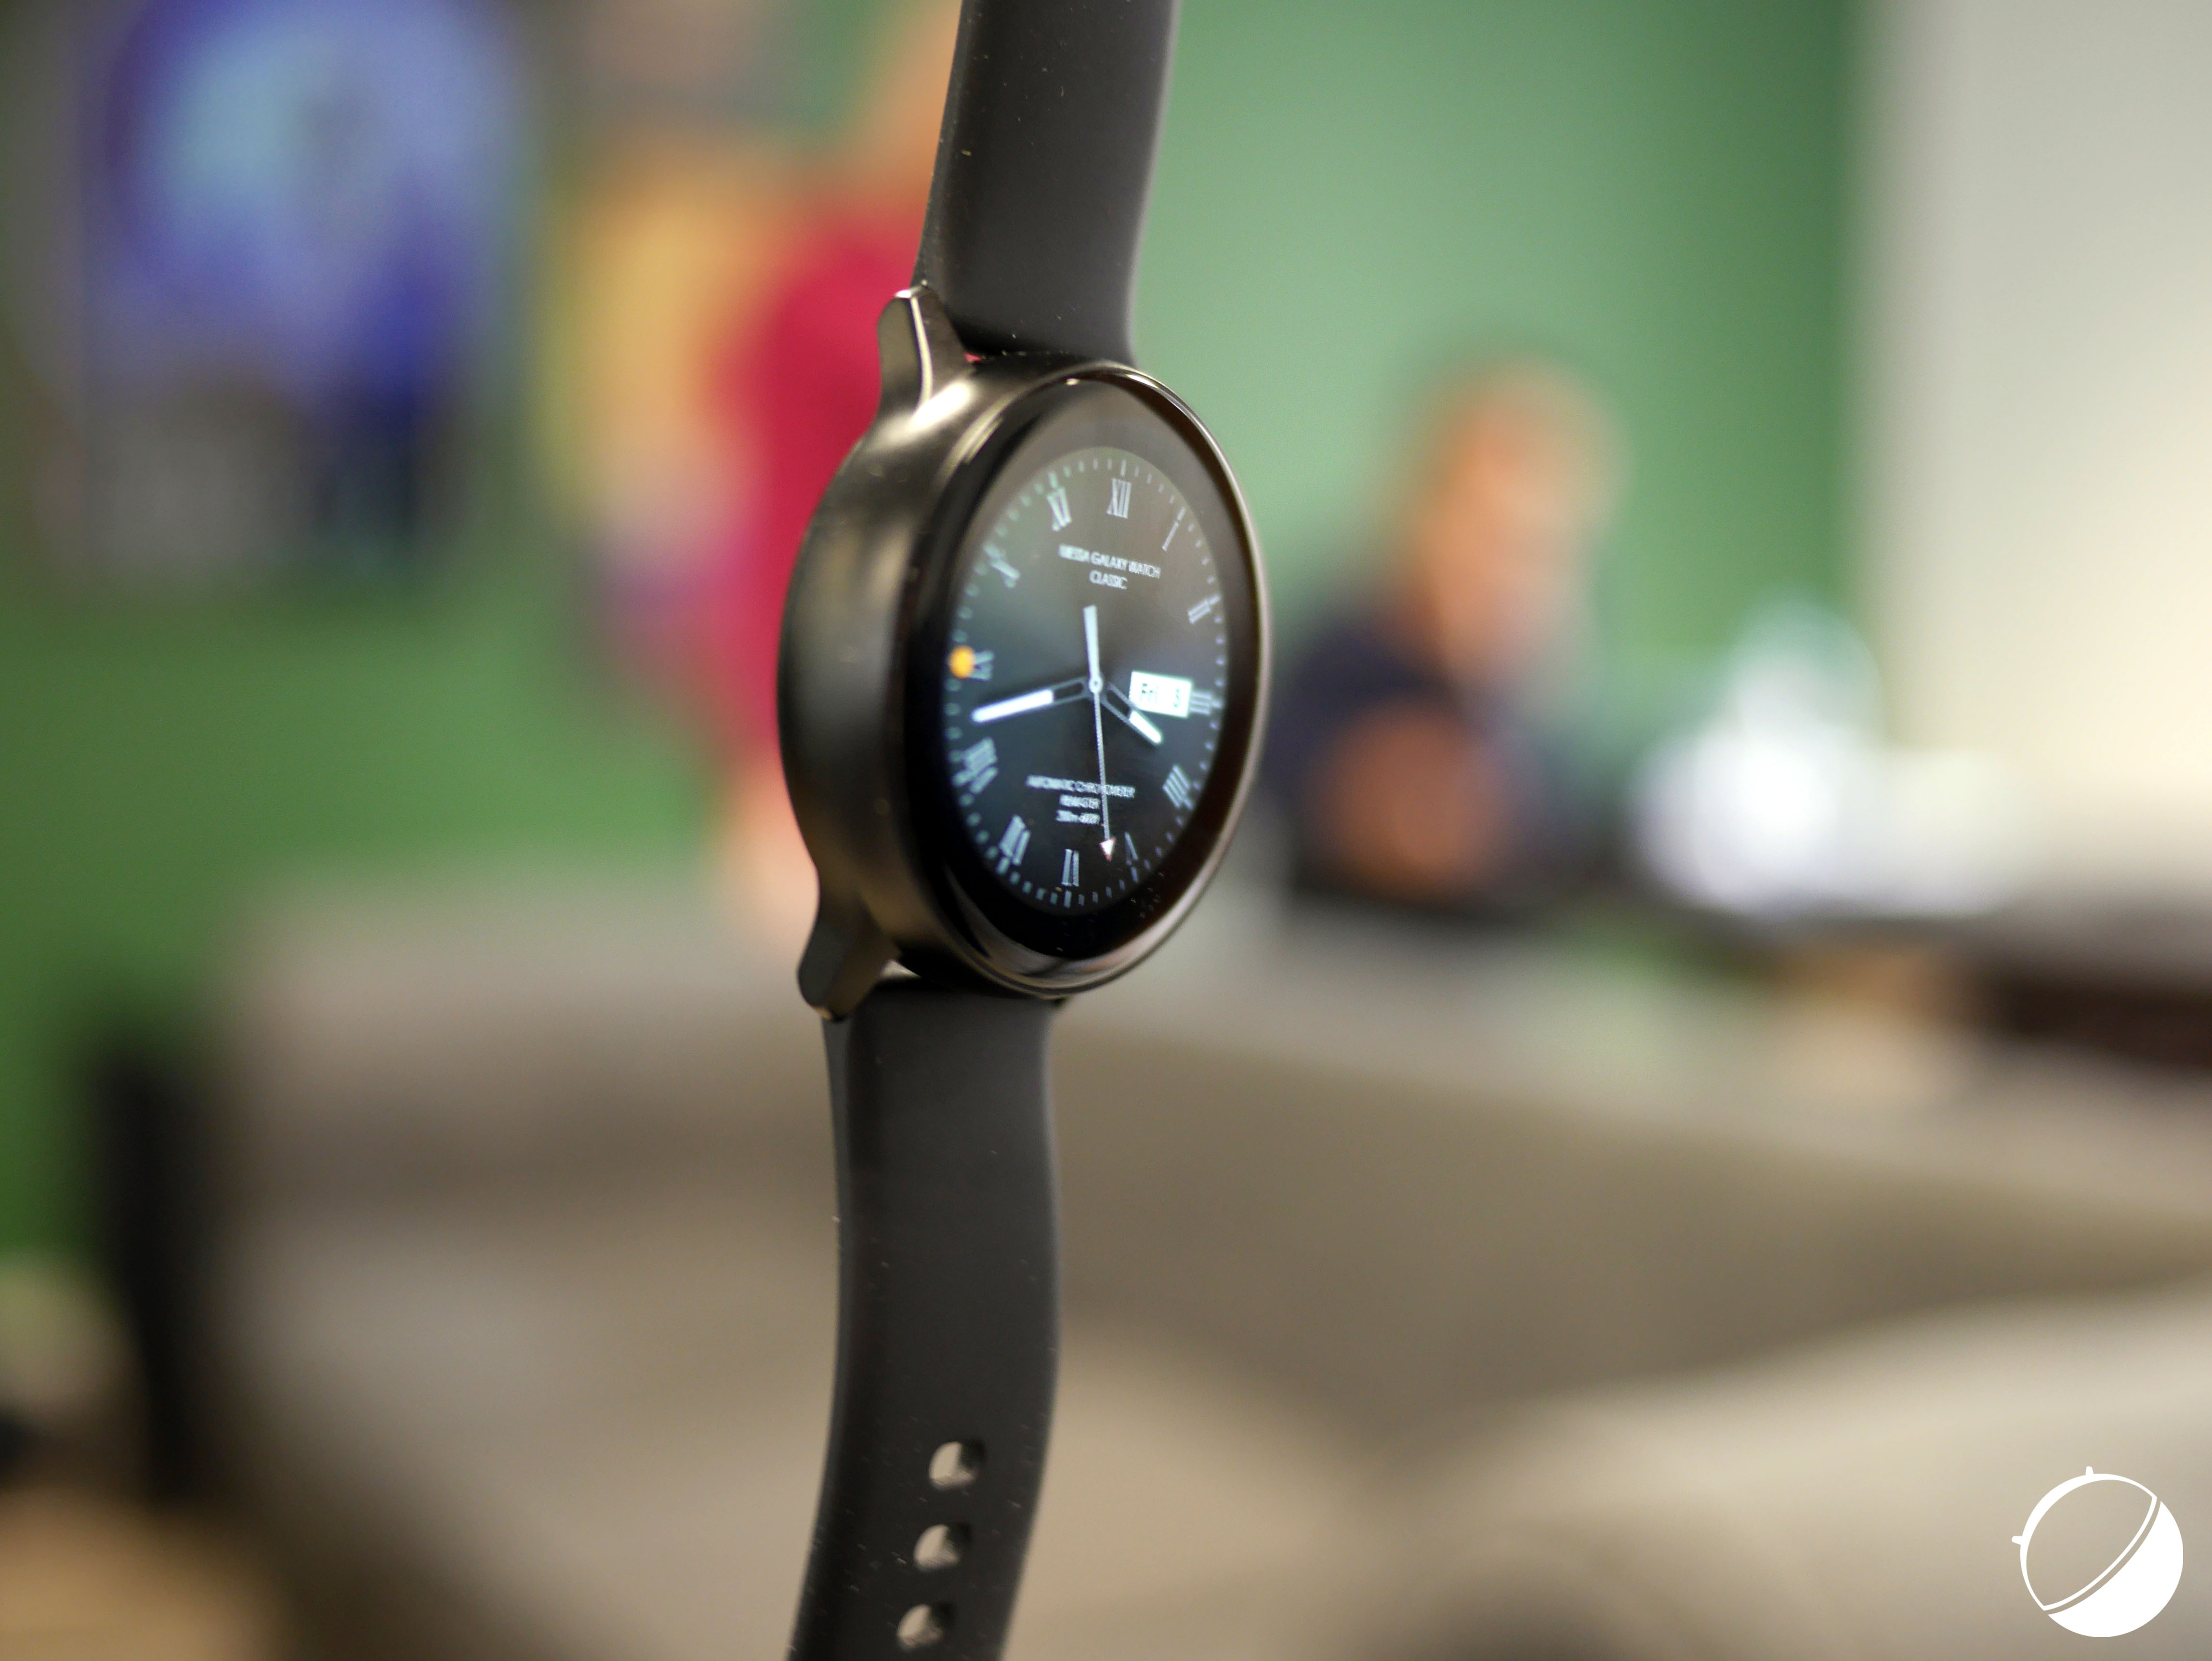 Samsung Galaxy Watch Active biais